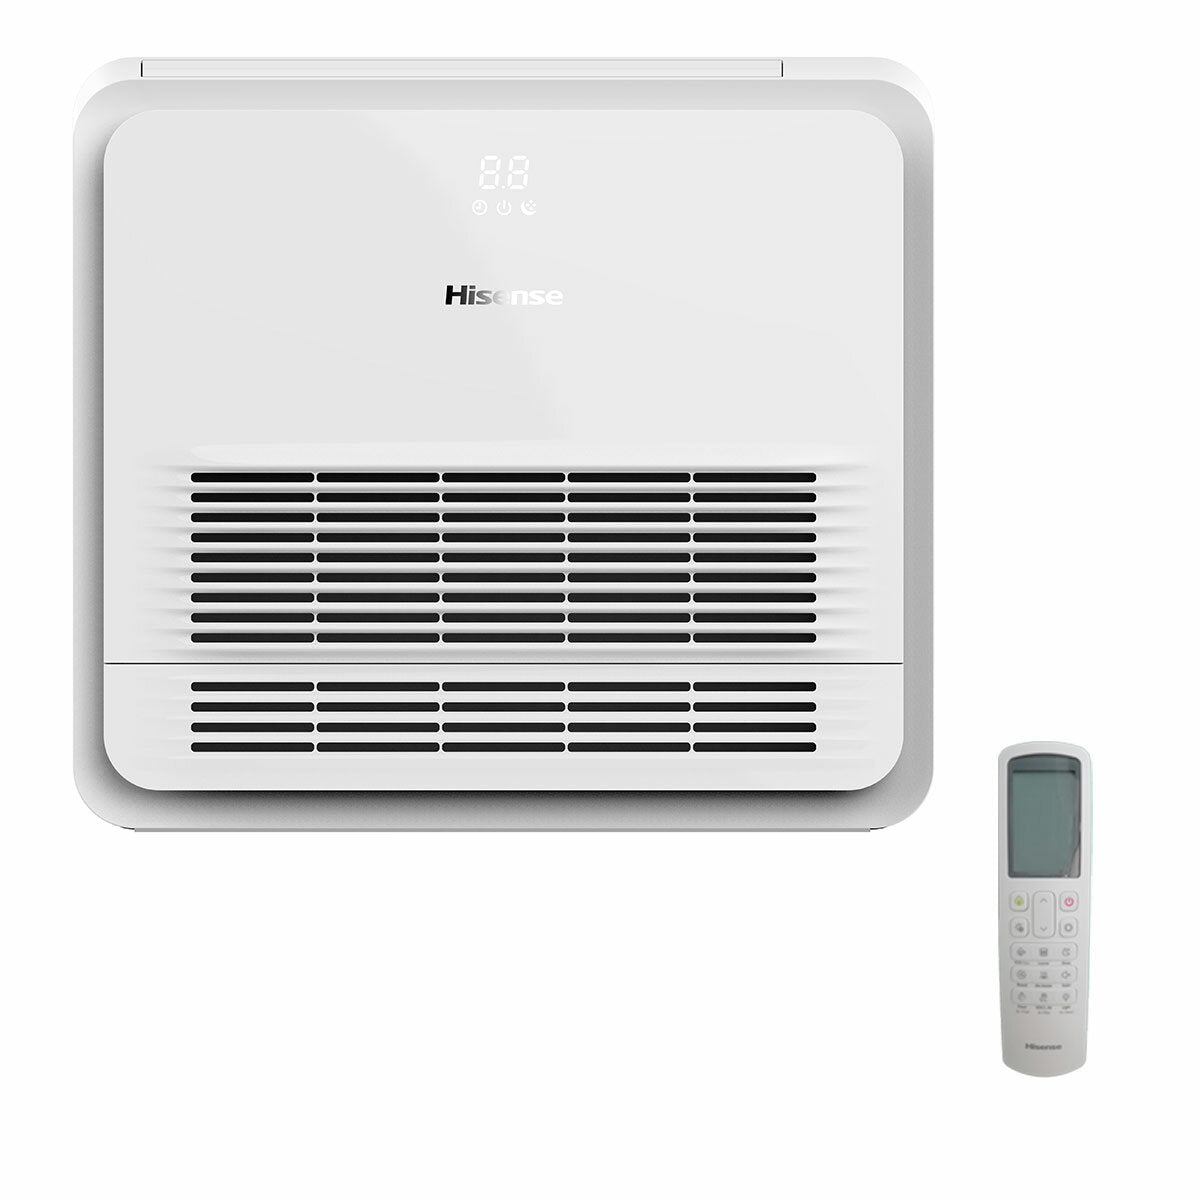 Hisense Console AKT dual split air conditioner 9000+12000 BTU inverter A++ outdoor unit 4.1 kW